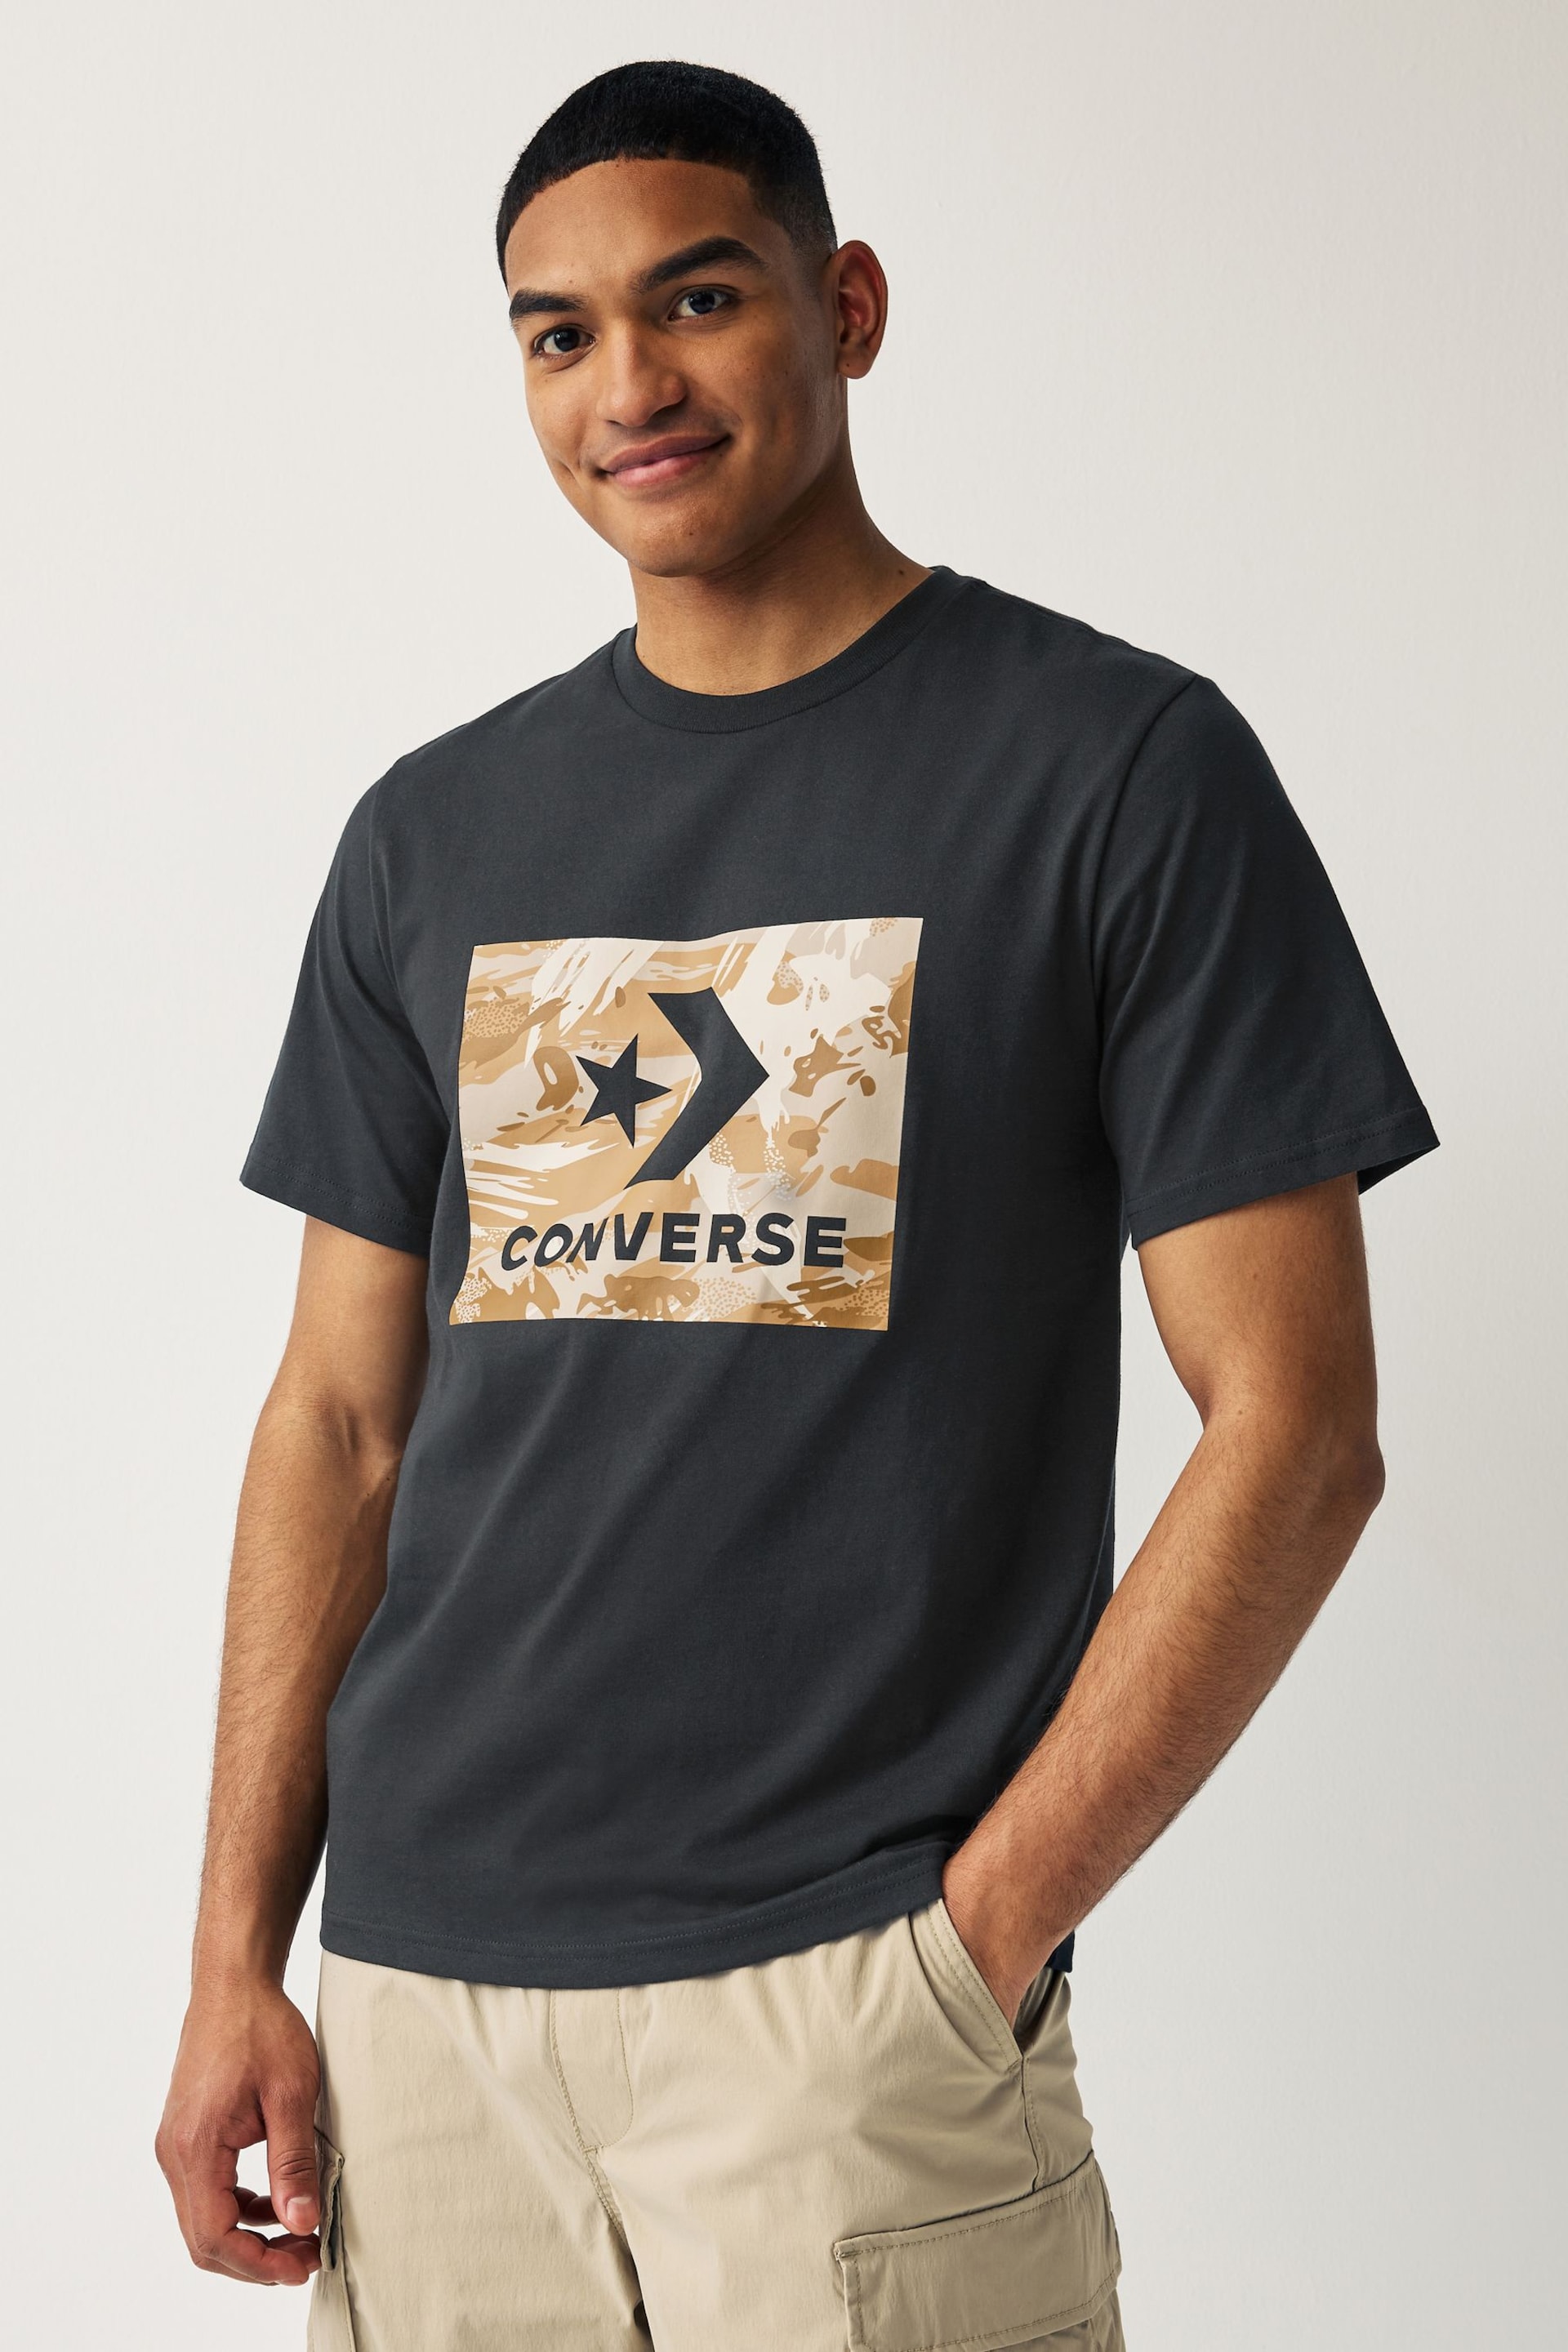 Converse Black Star Chevron Knock Out Camo T-Shirt - Image 1 of 4